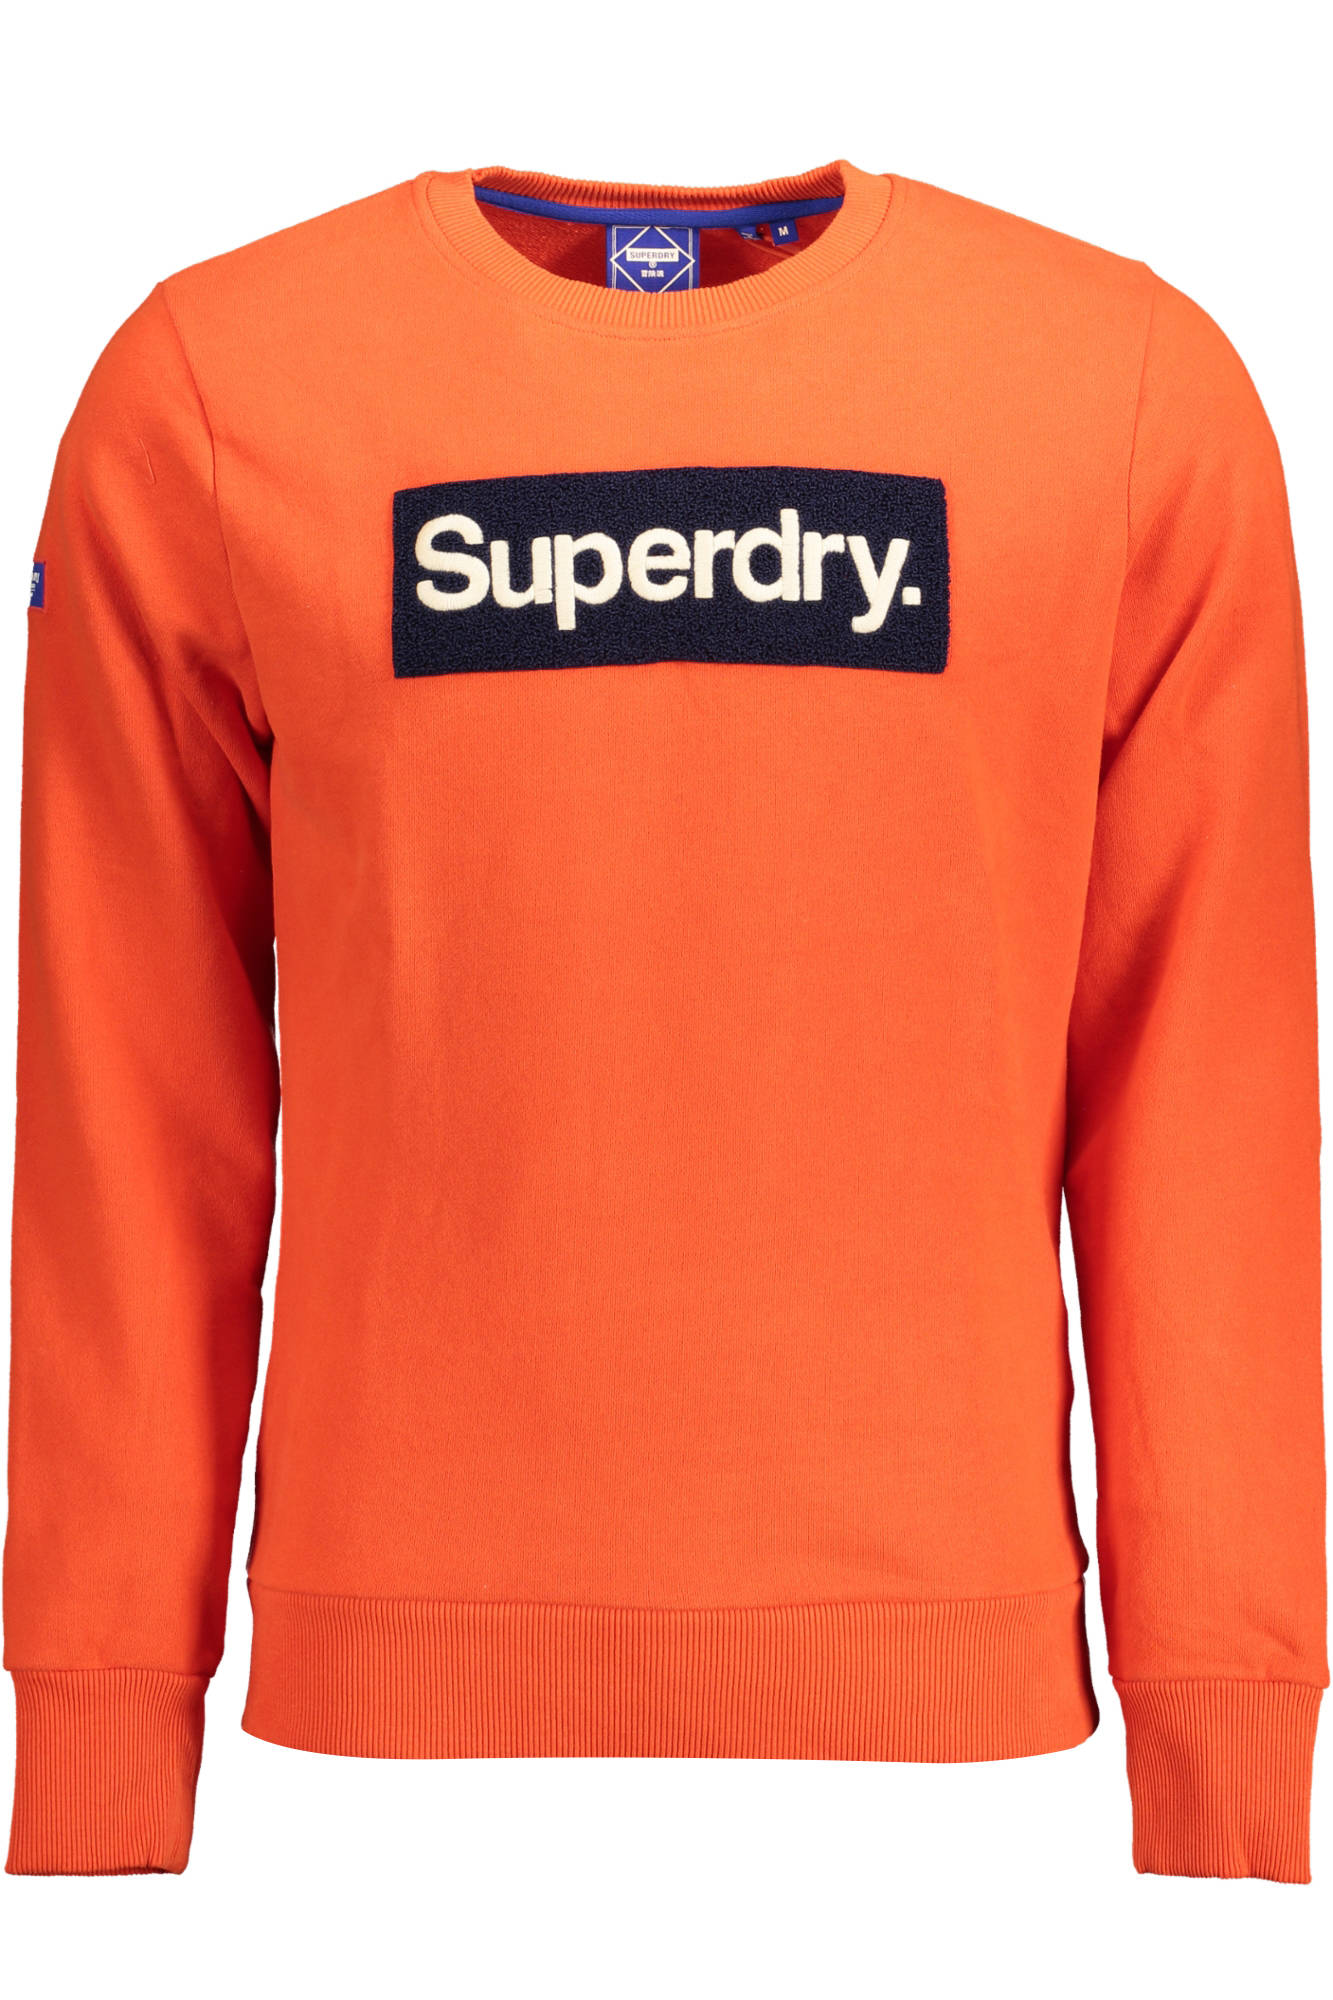 Superdry Orange Cotton Sweater - Fizigo